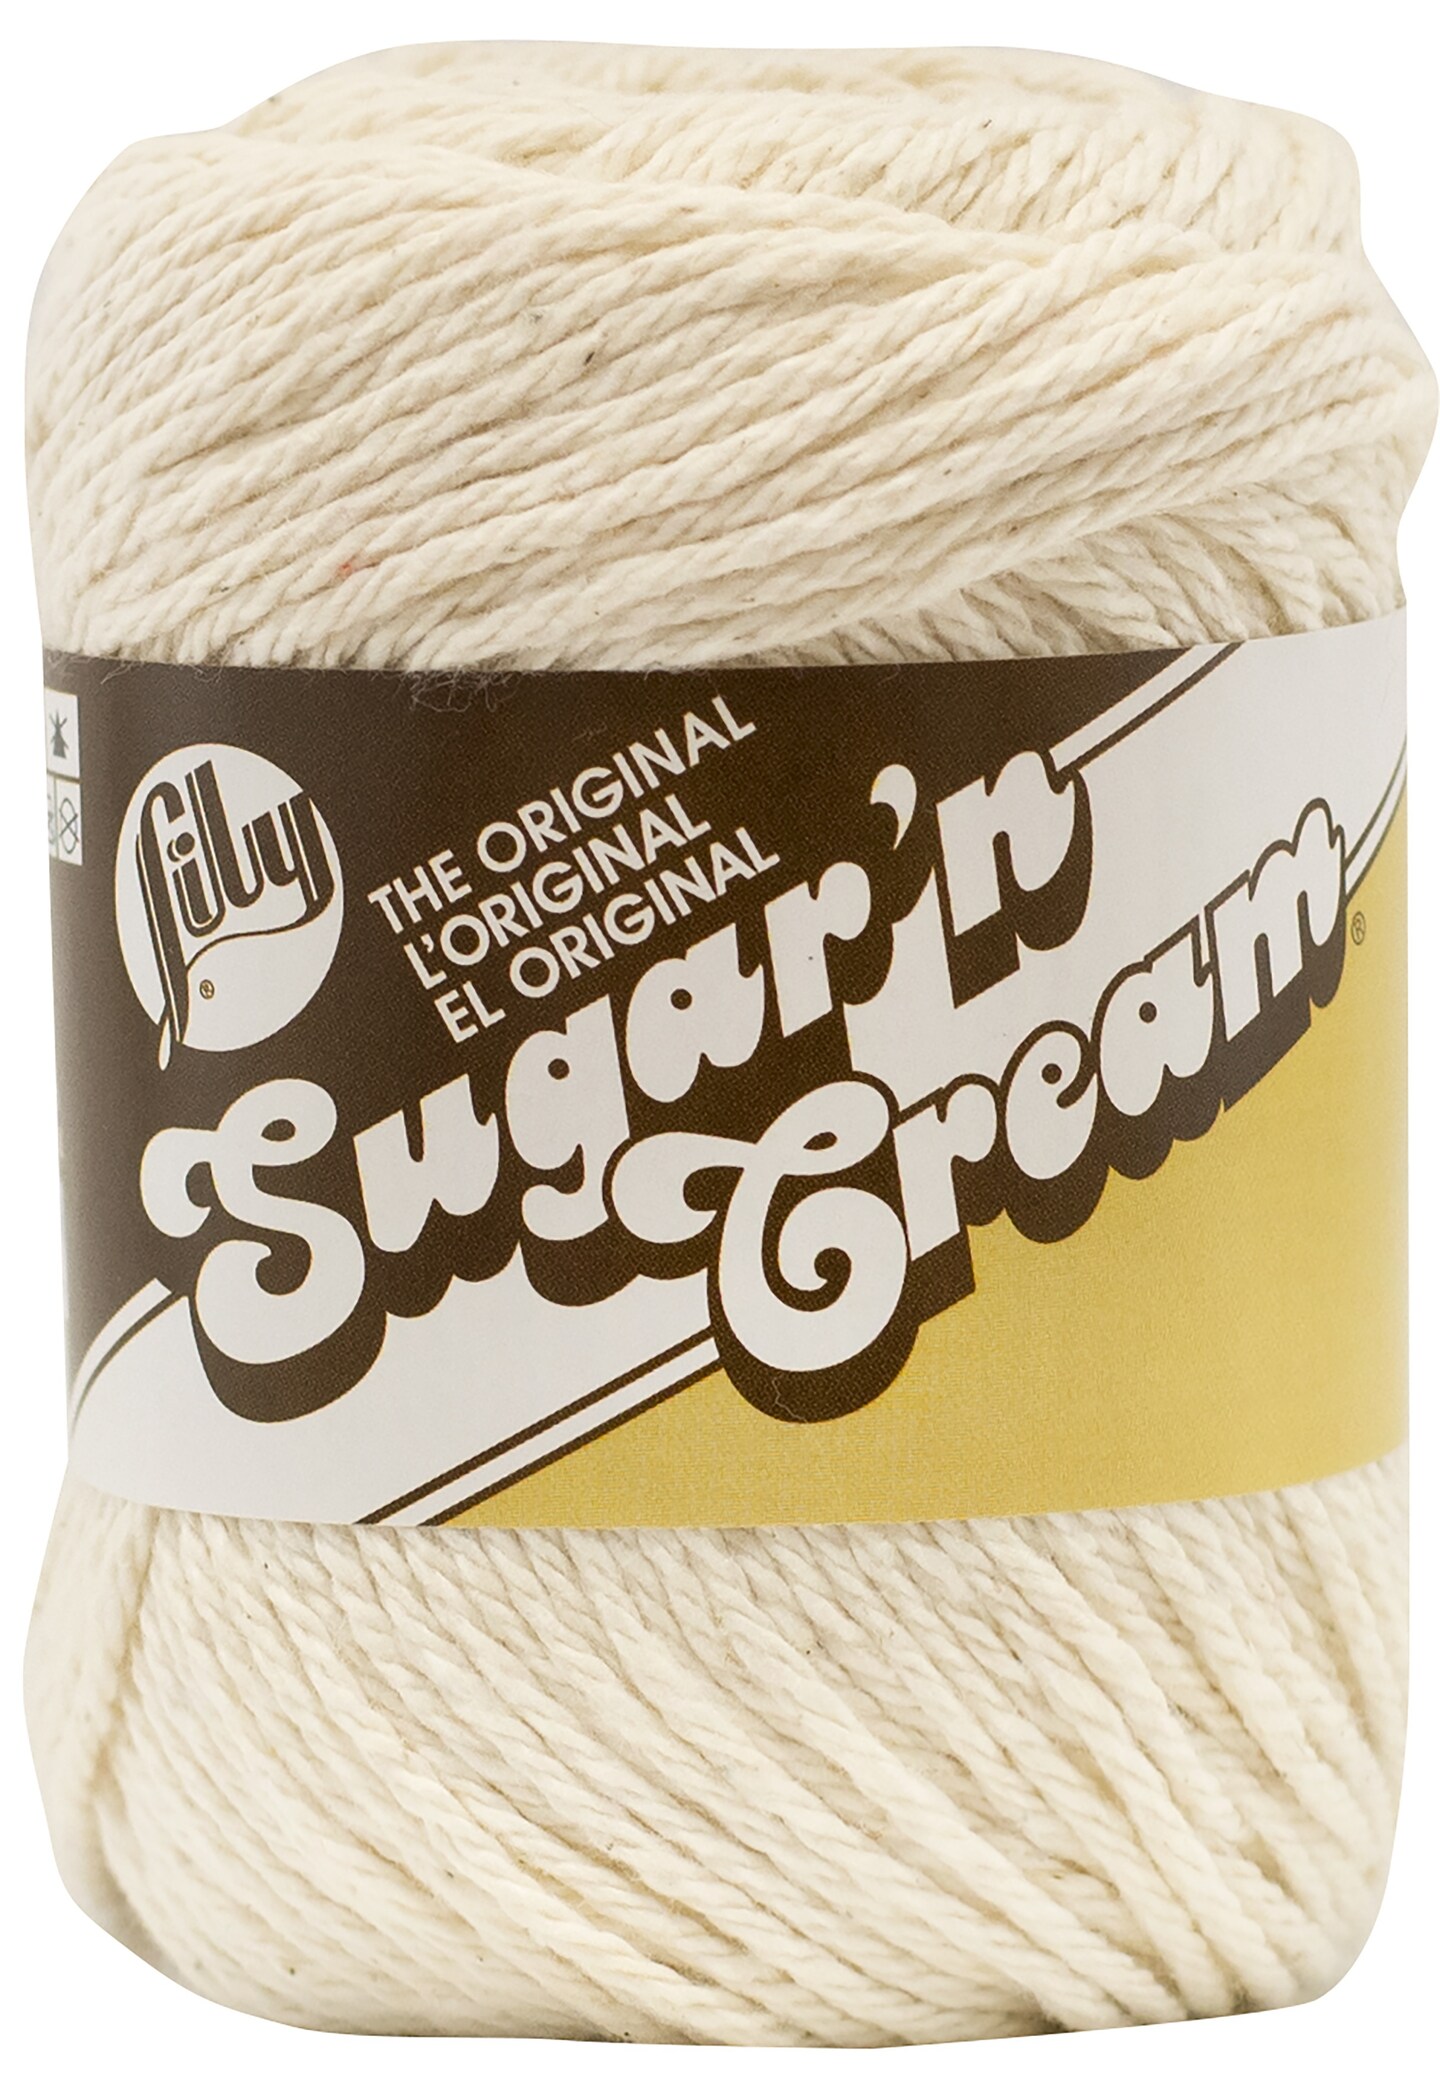 Lily Sugar N' Cream Cotton Yarn, Cotton Yarn, Yarn for Home Decor